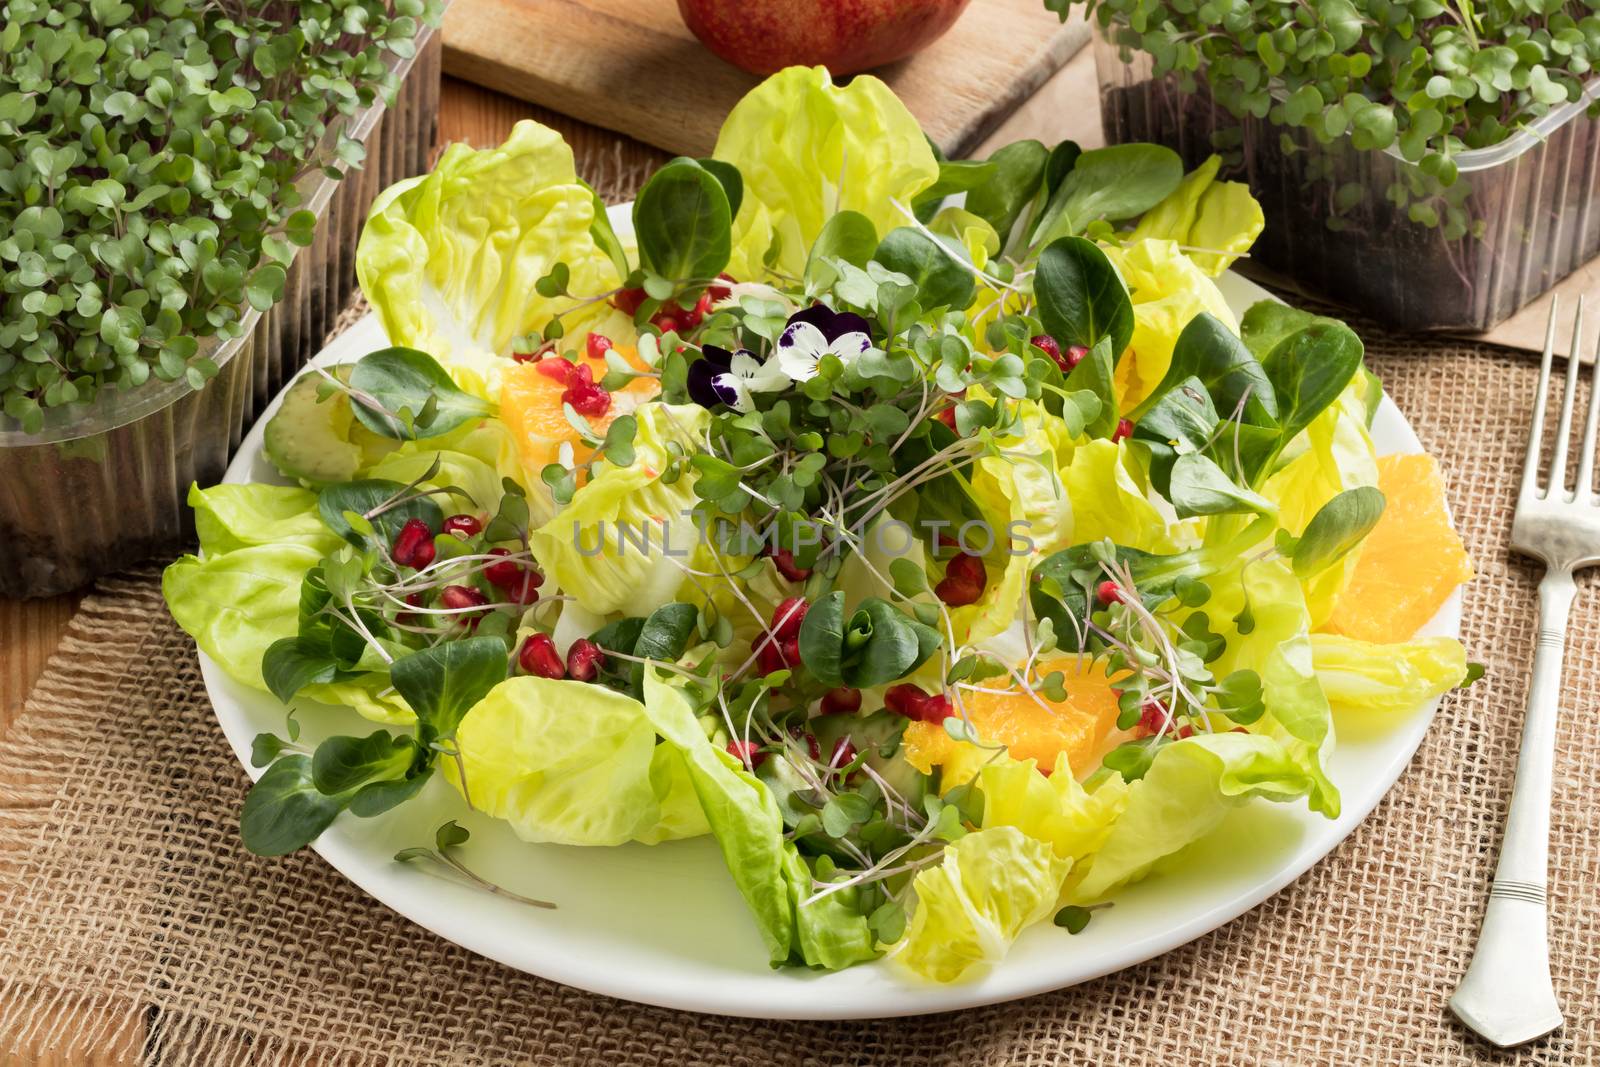 Vegetable salad with freshly grown kale and broccoli micro greens, lettuce, corn salad, avocado, orange, pomegranate